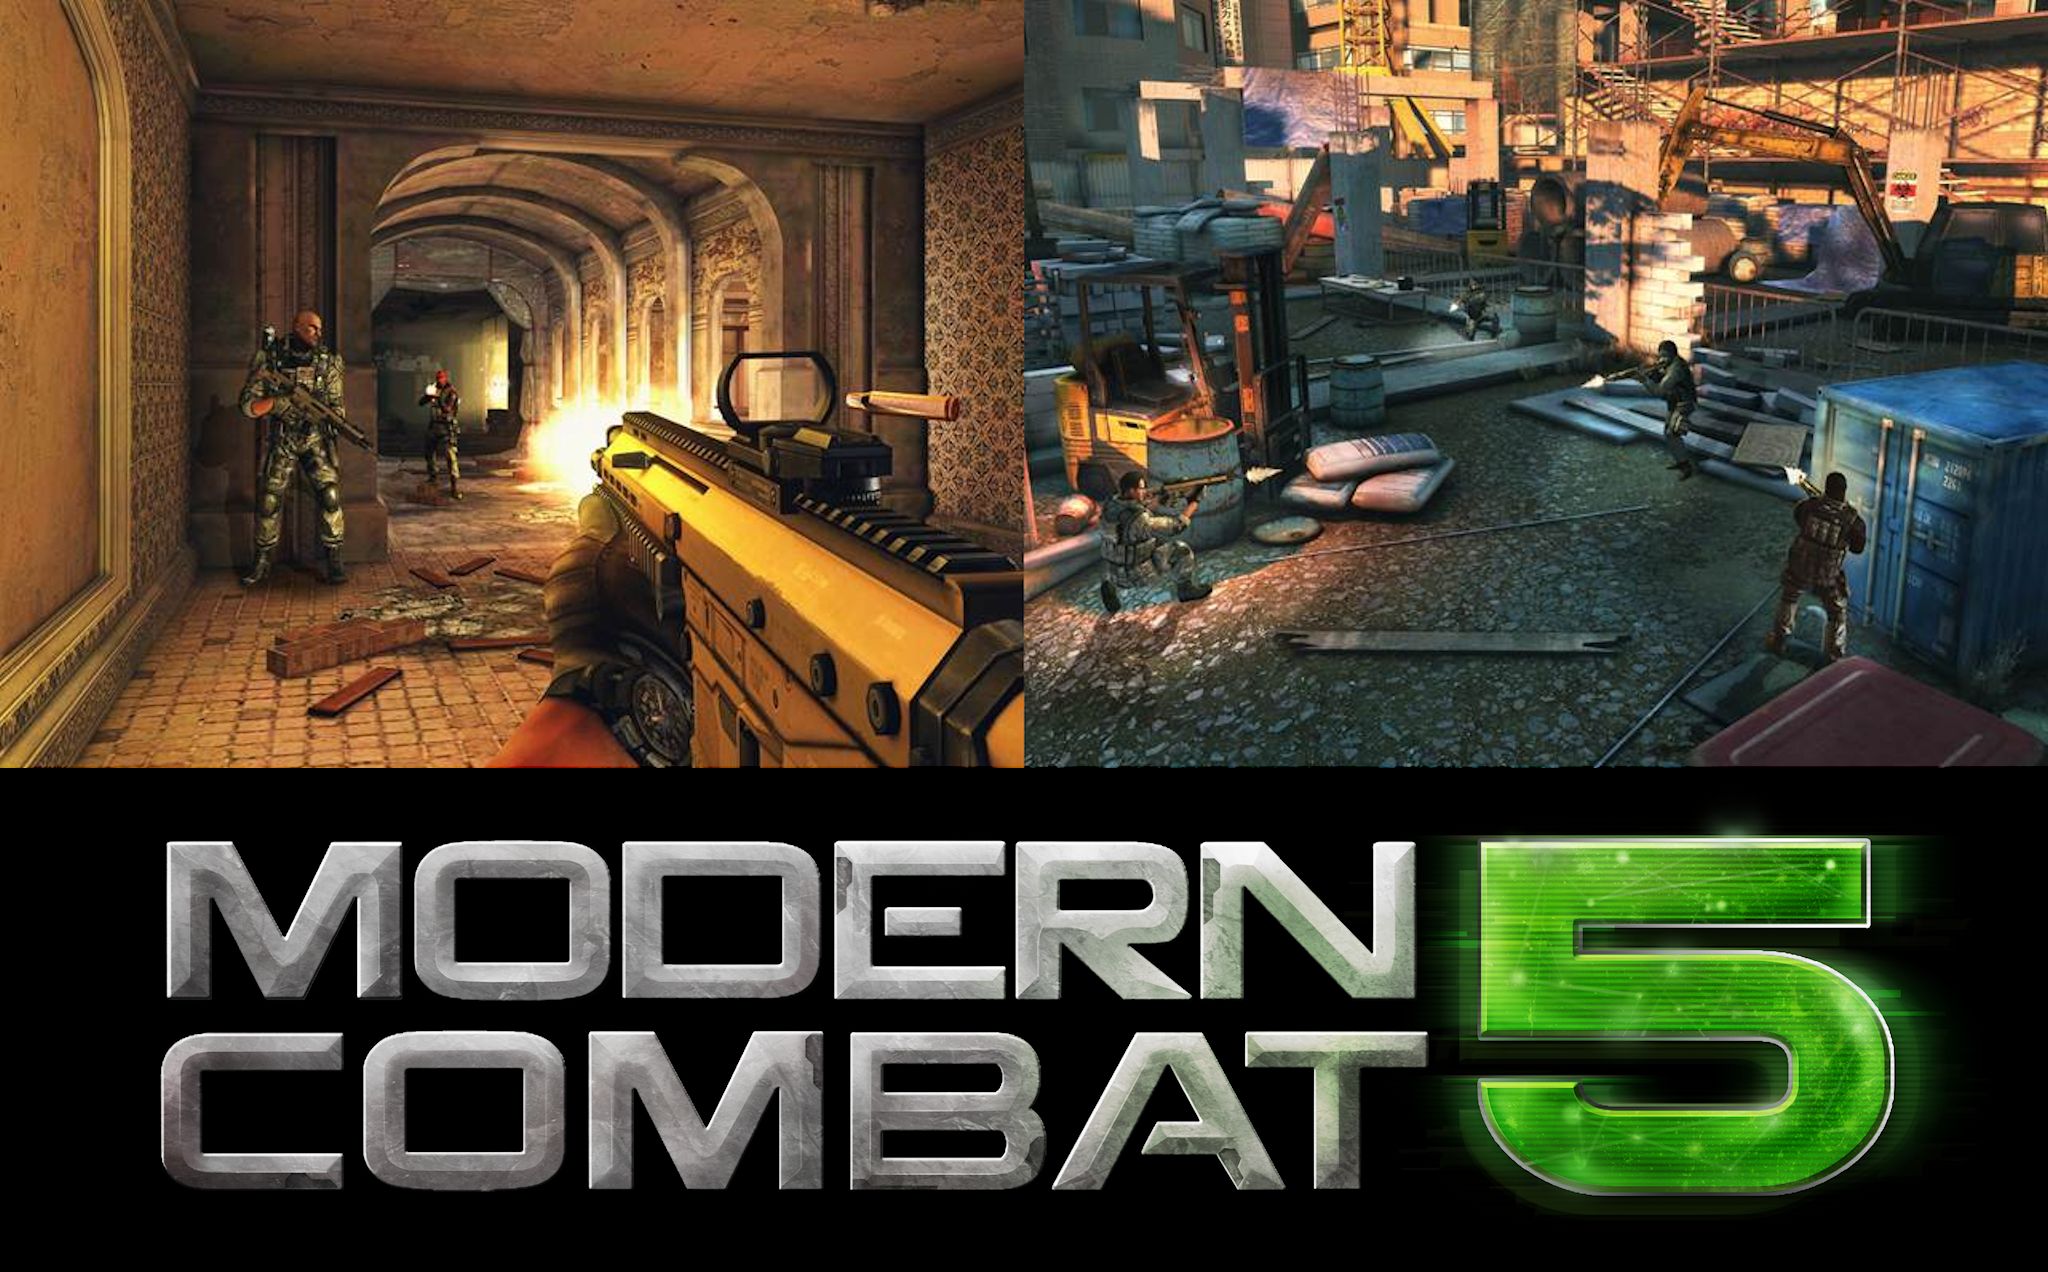 Modern_Combat_5_multiplayer_screens.jpg